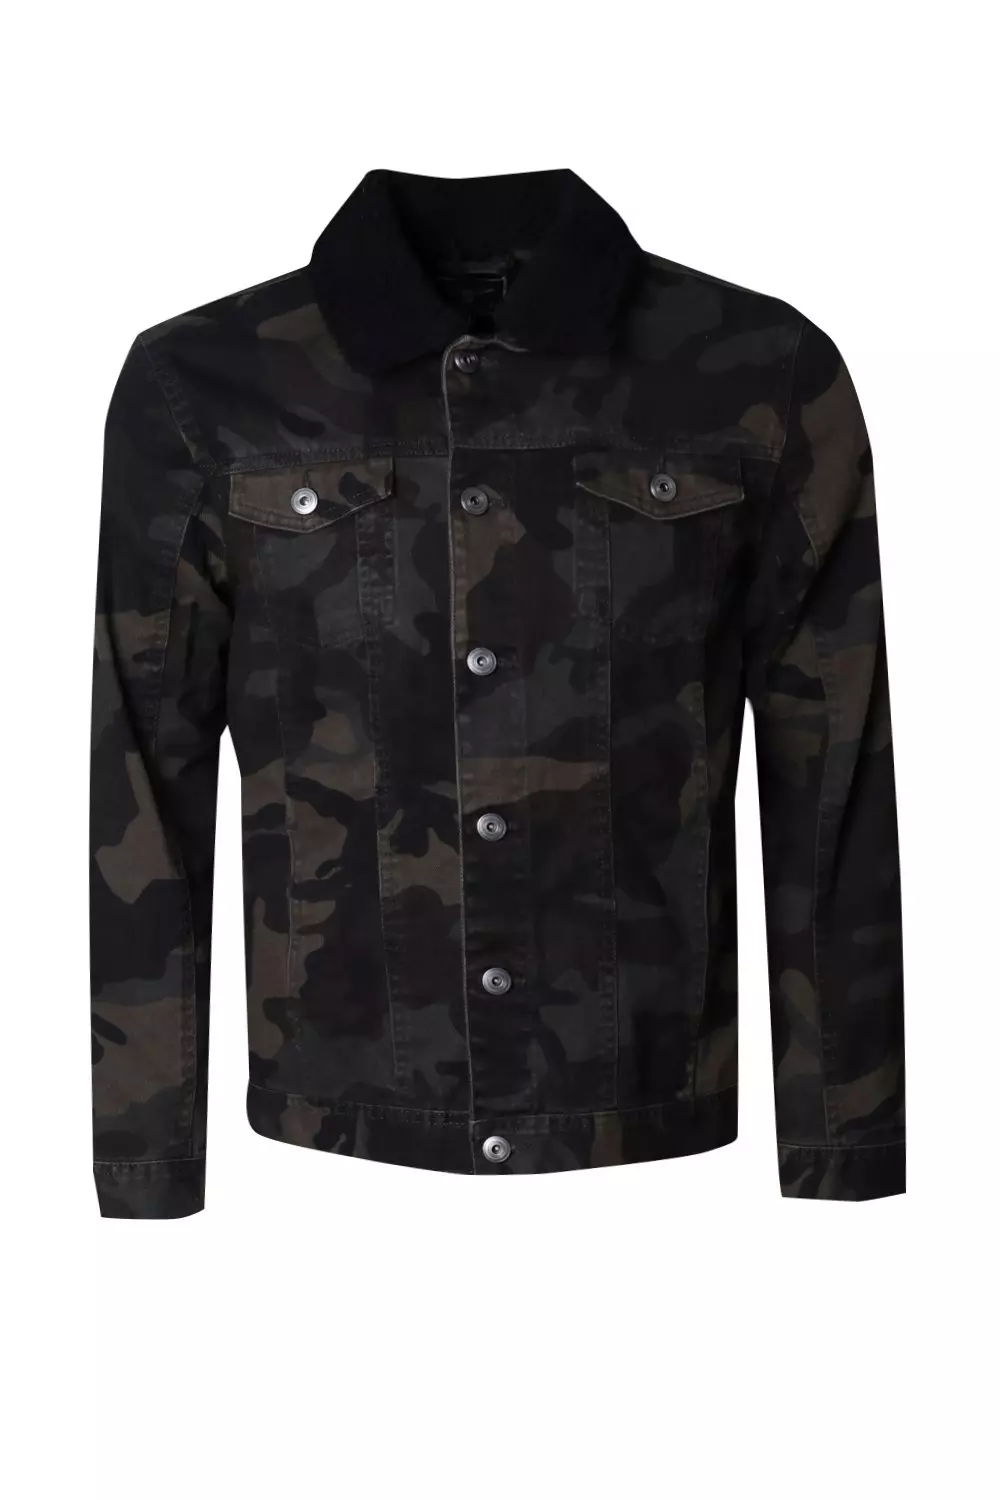 Men's Desert Camouflage Jean Jacket Men Denim Jacket Coats Male